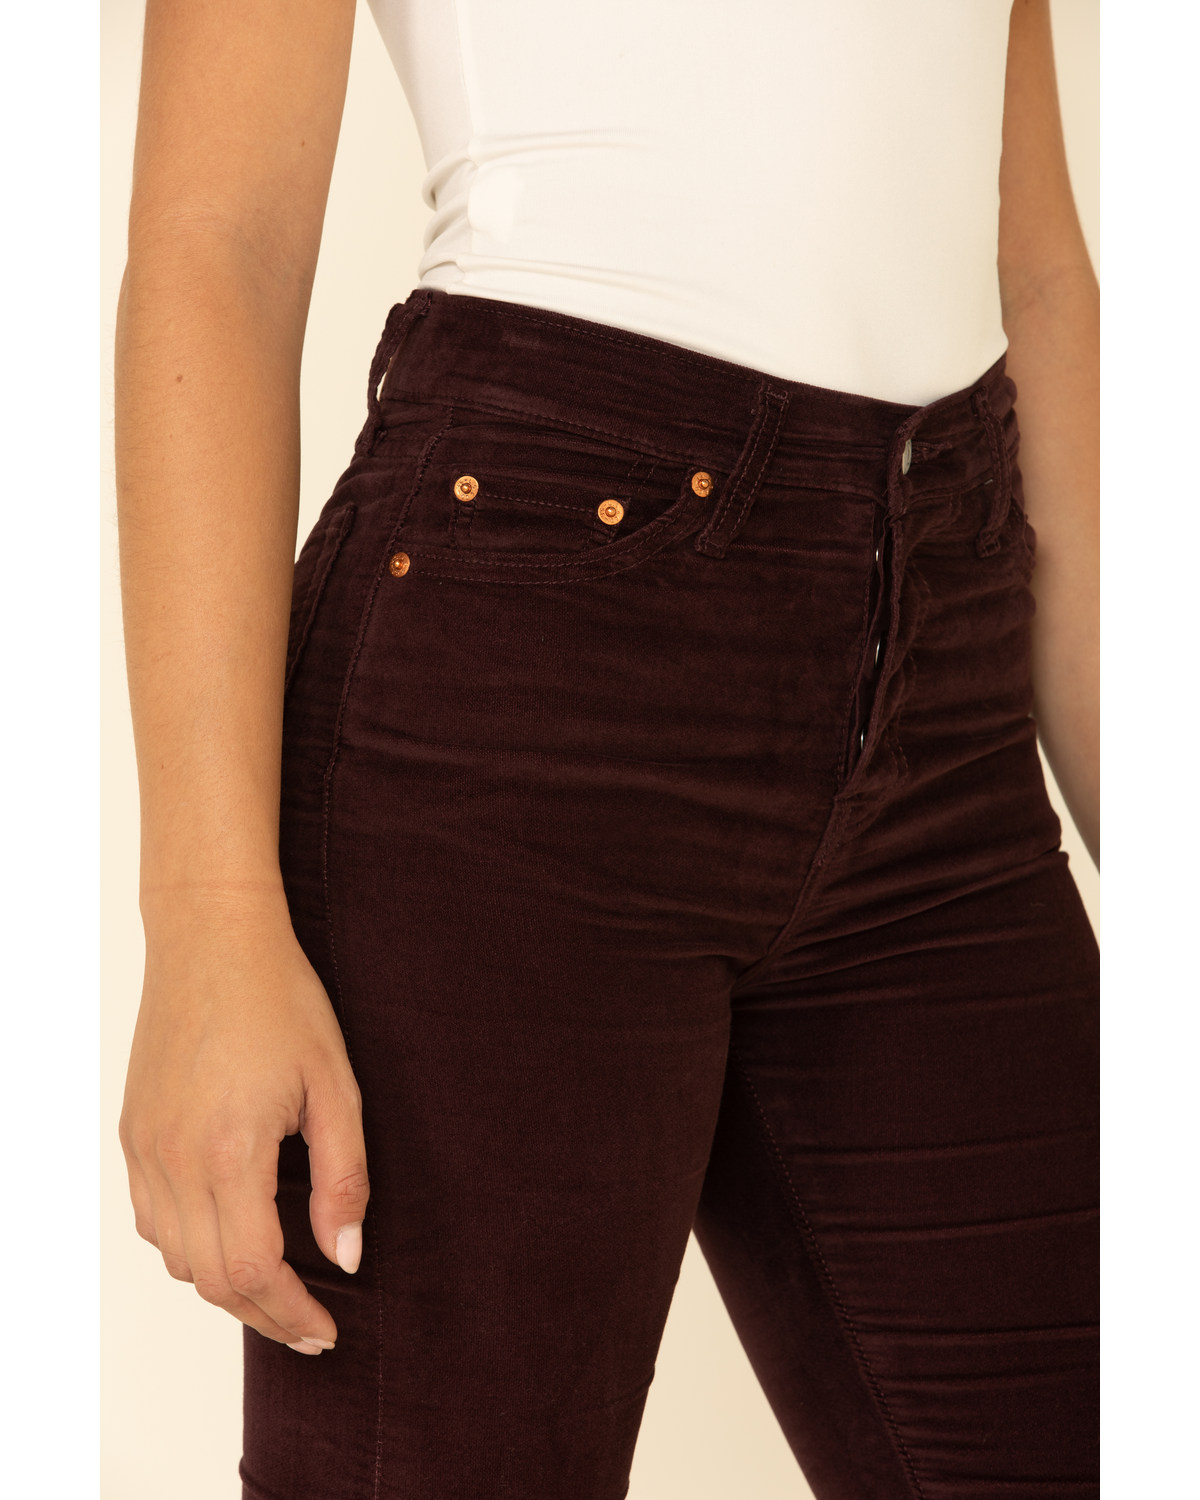 Levi's Women's Moleskin High Rise Wedgie Skinny Jeans Burgundy 26W x 27L - image 4 of 6